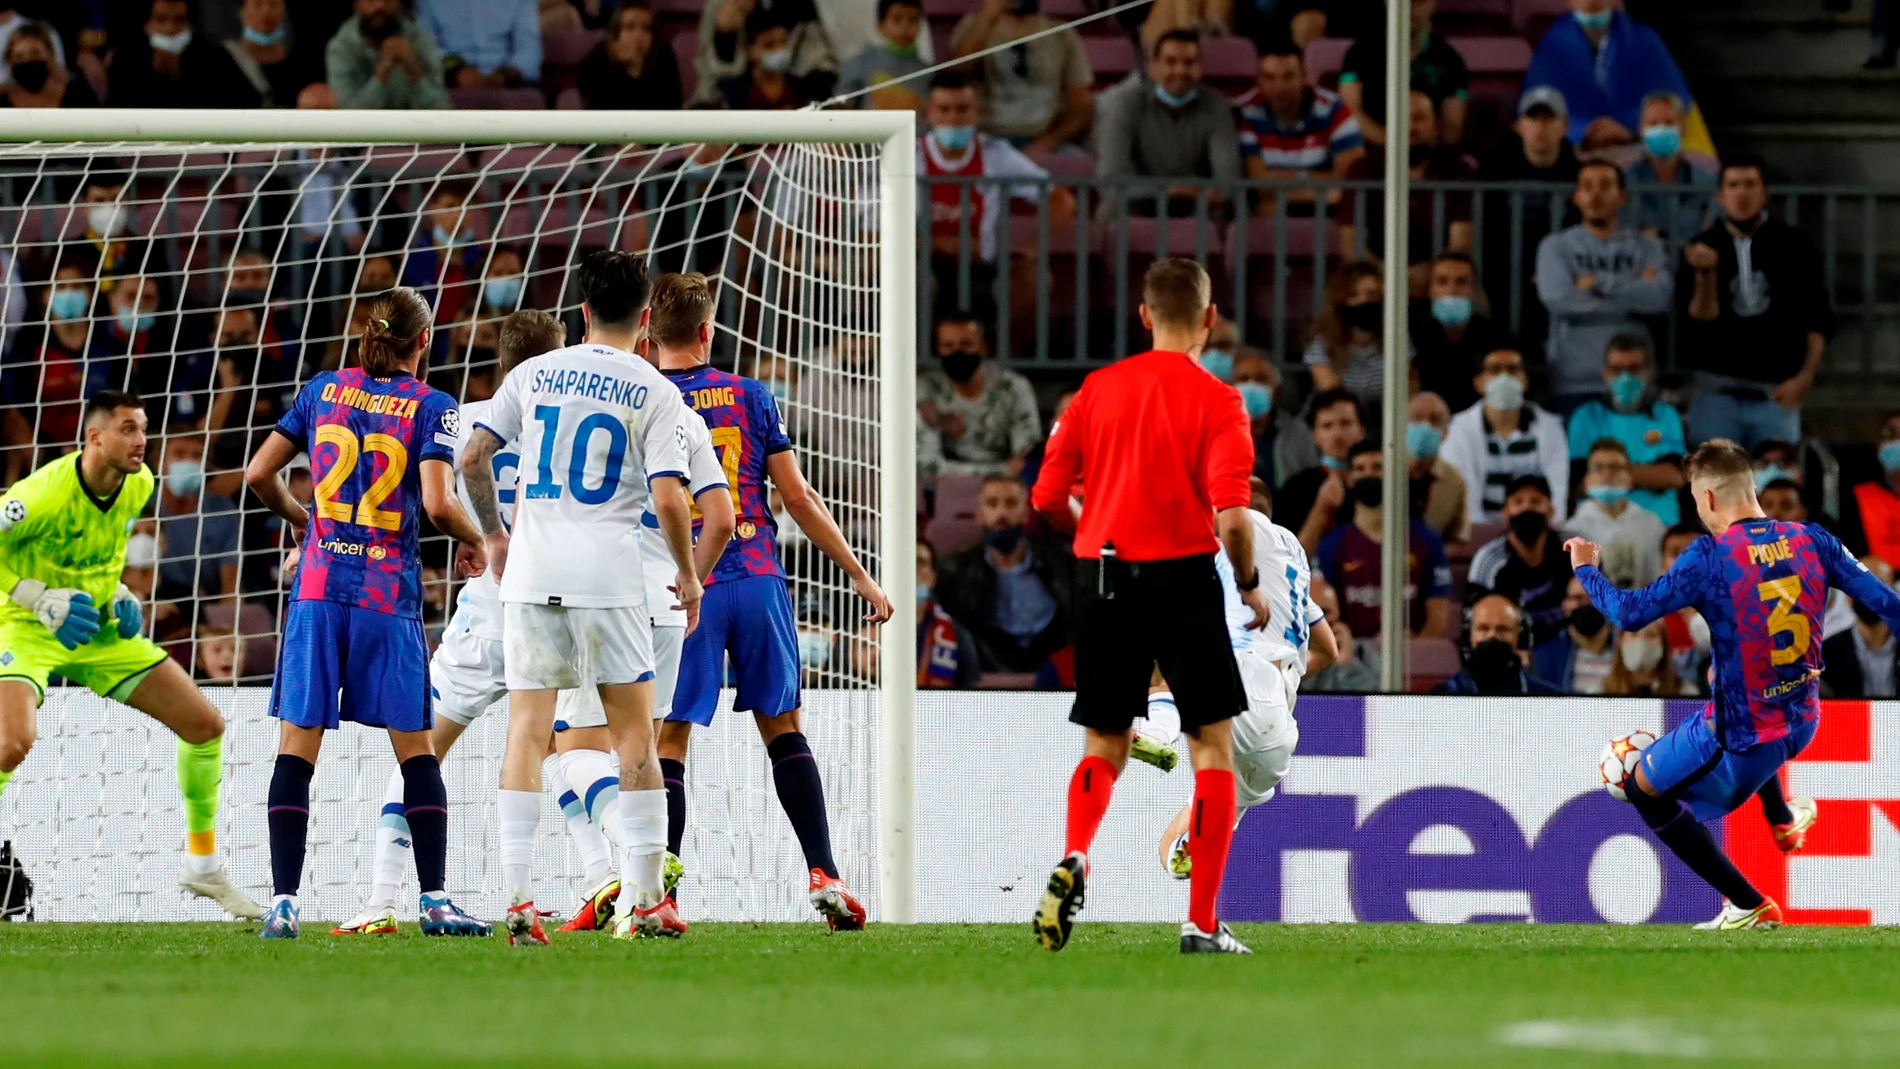 El remate de Piqué que supuso el primer gol del Barcelona en esta Champions